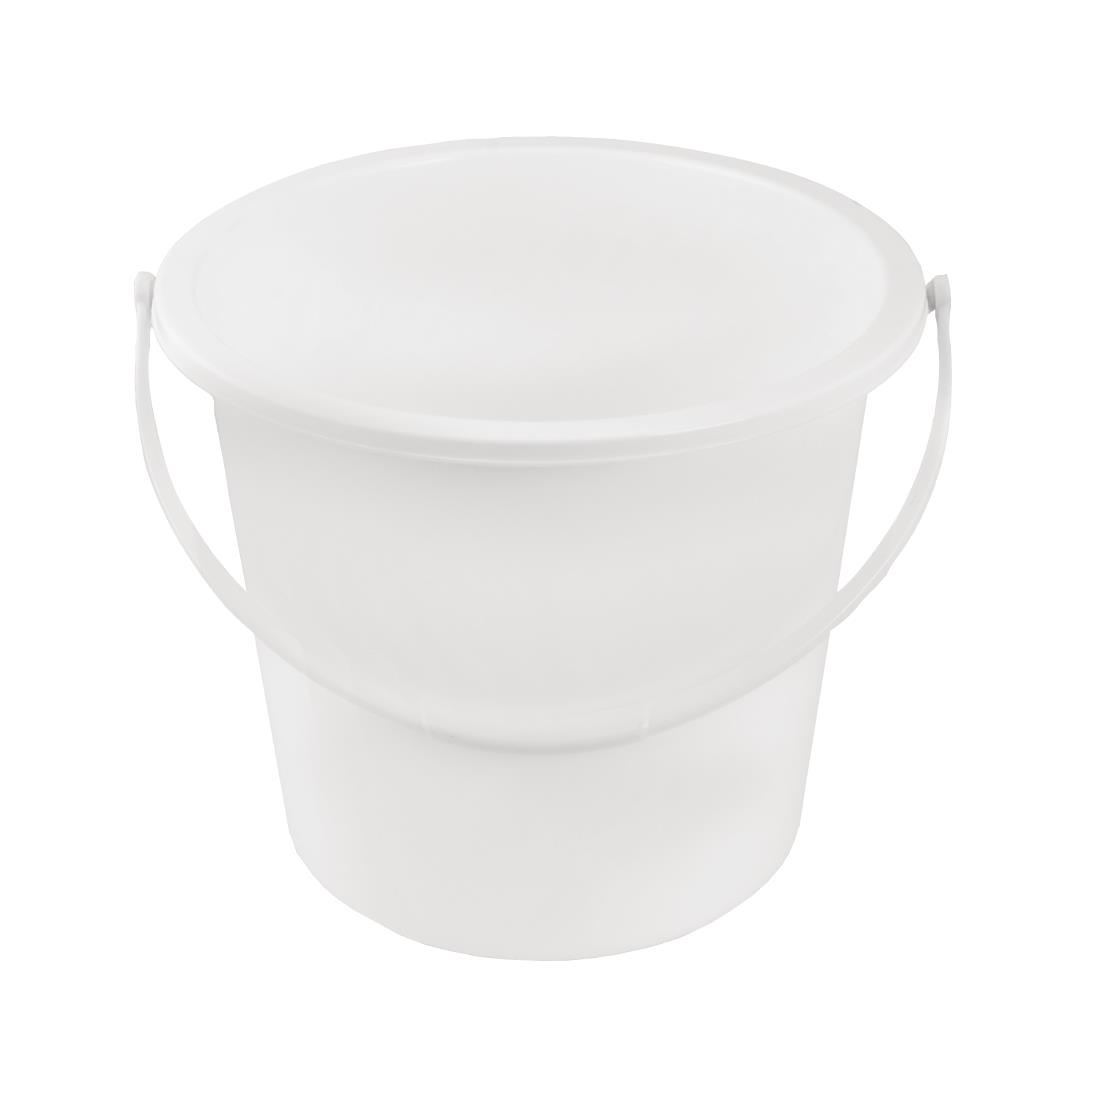 Jantex Round Plastic Bucket White 10Ltr (DA420)